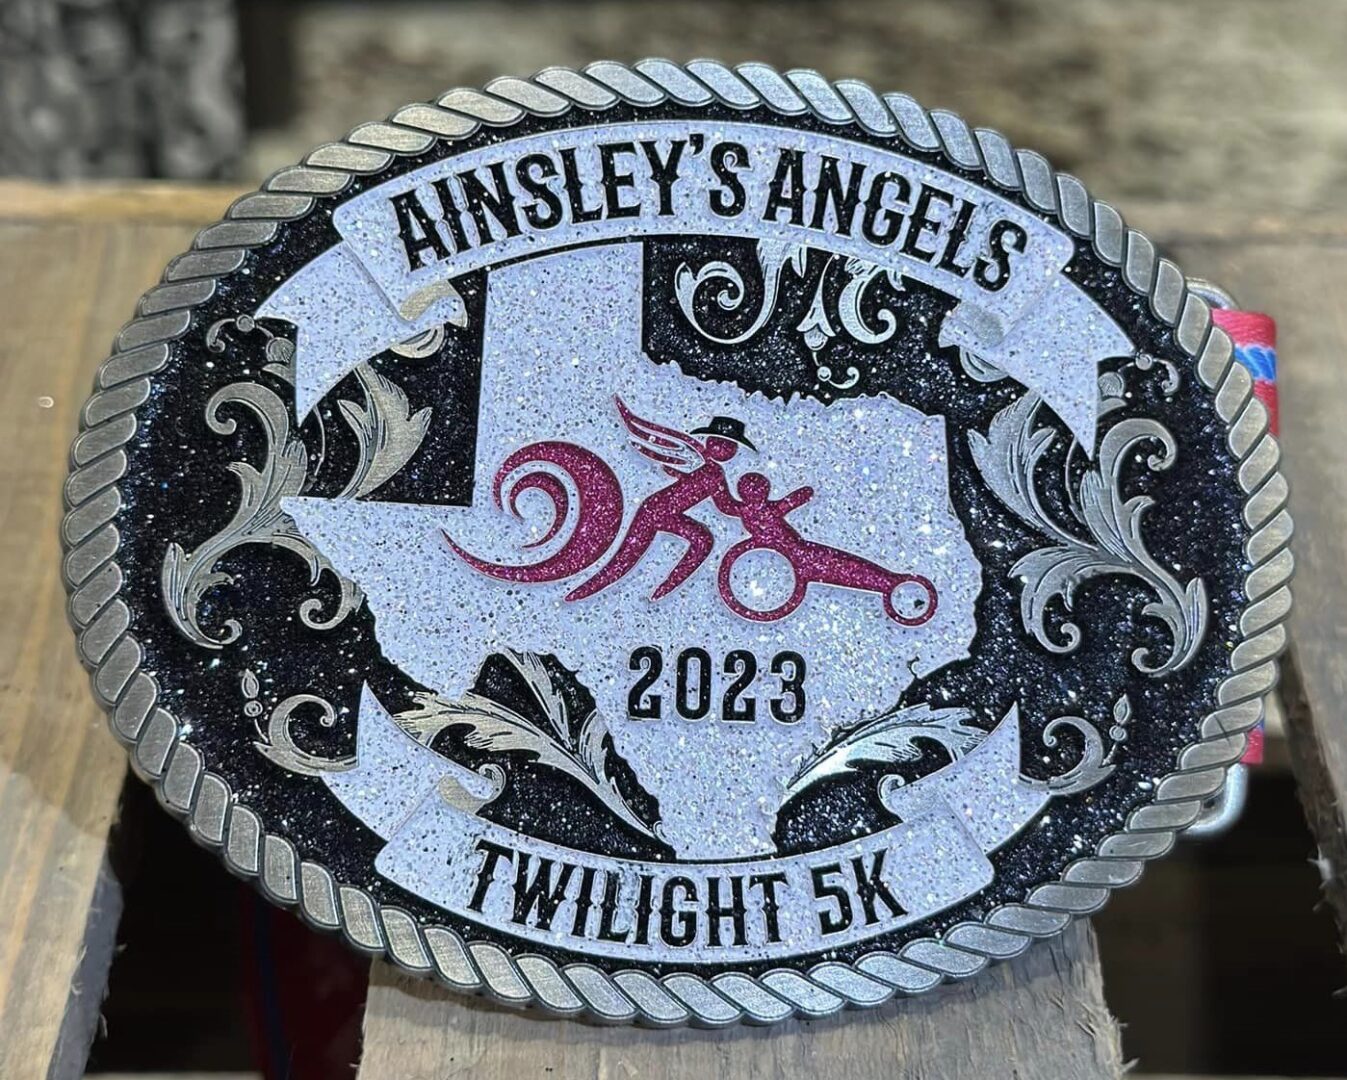 Annsley angels twilight 5k medal